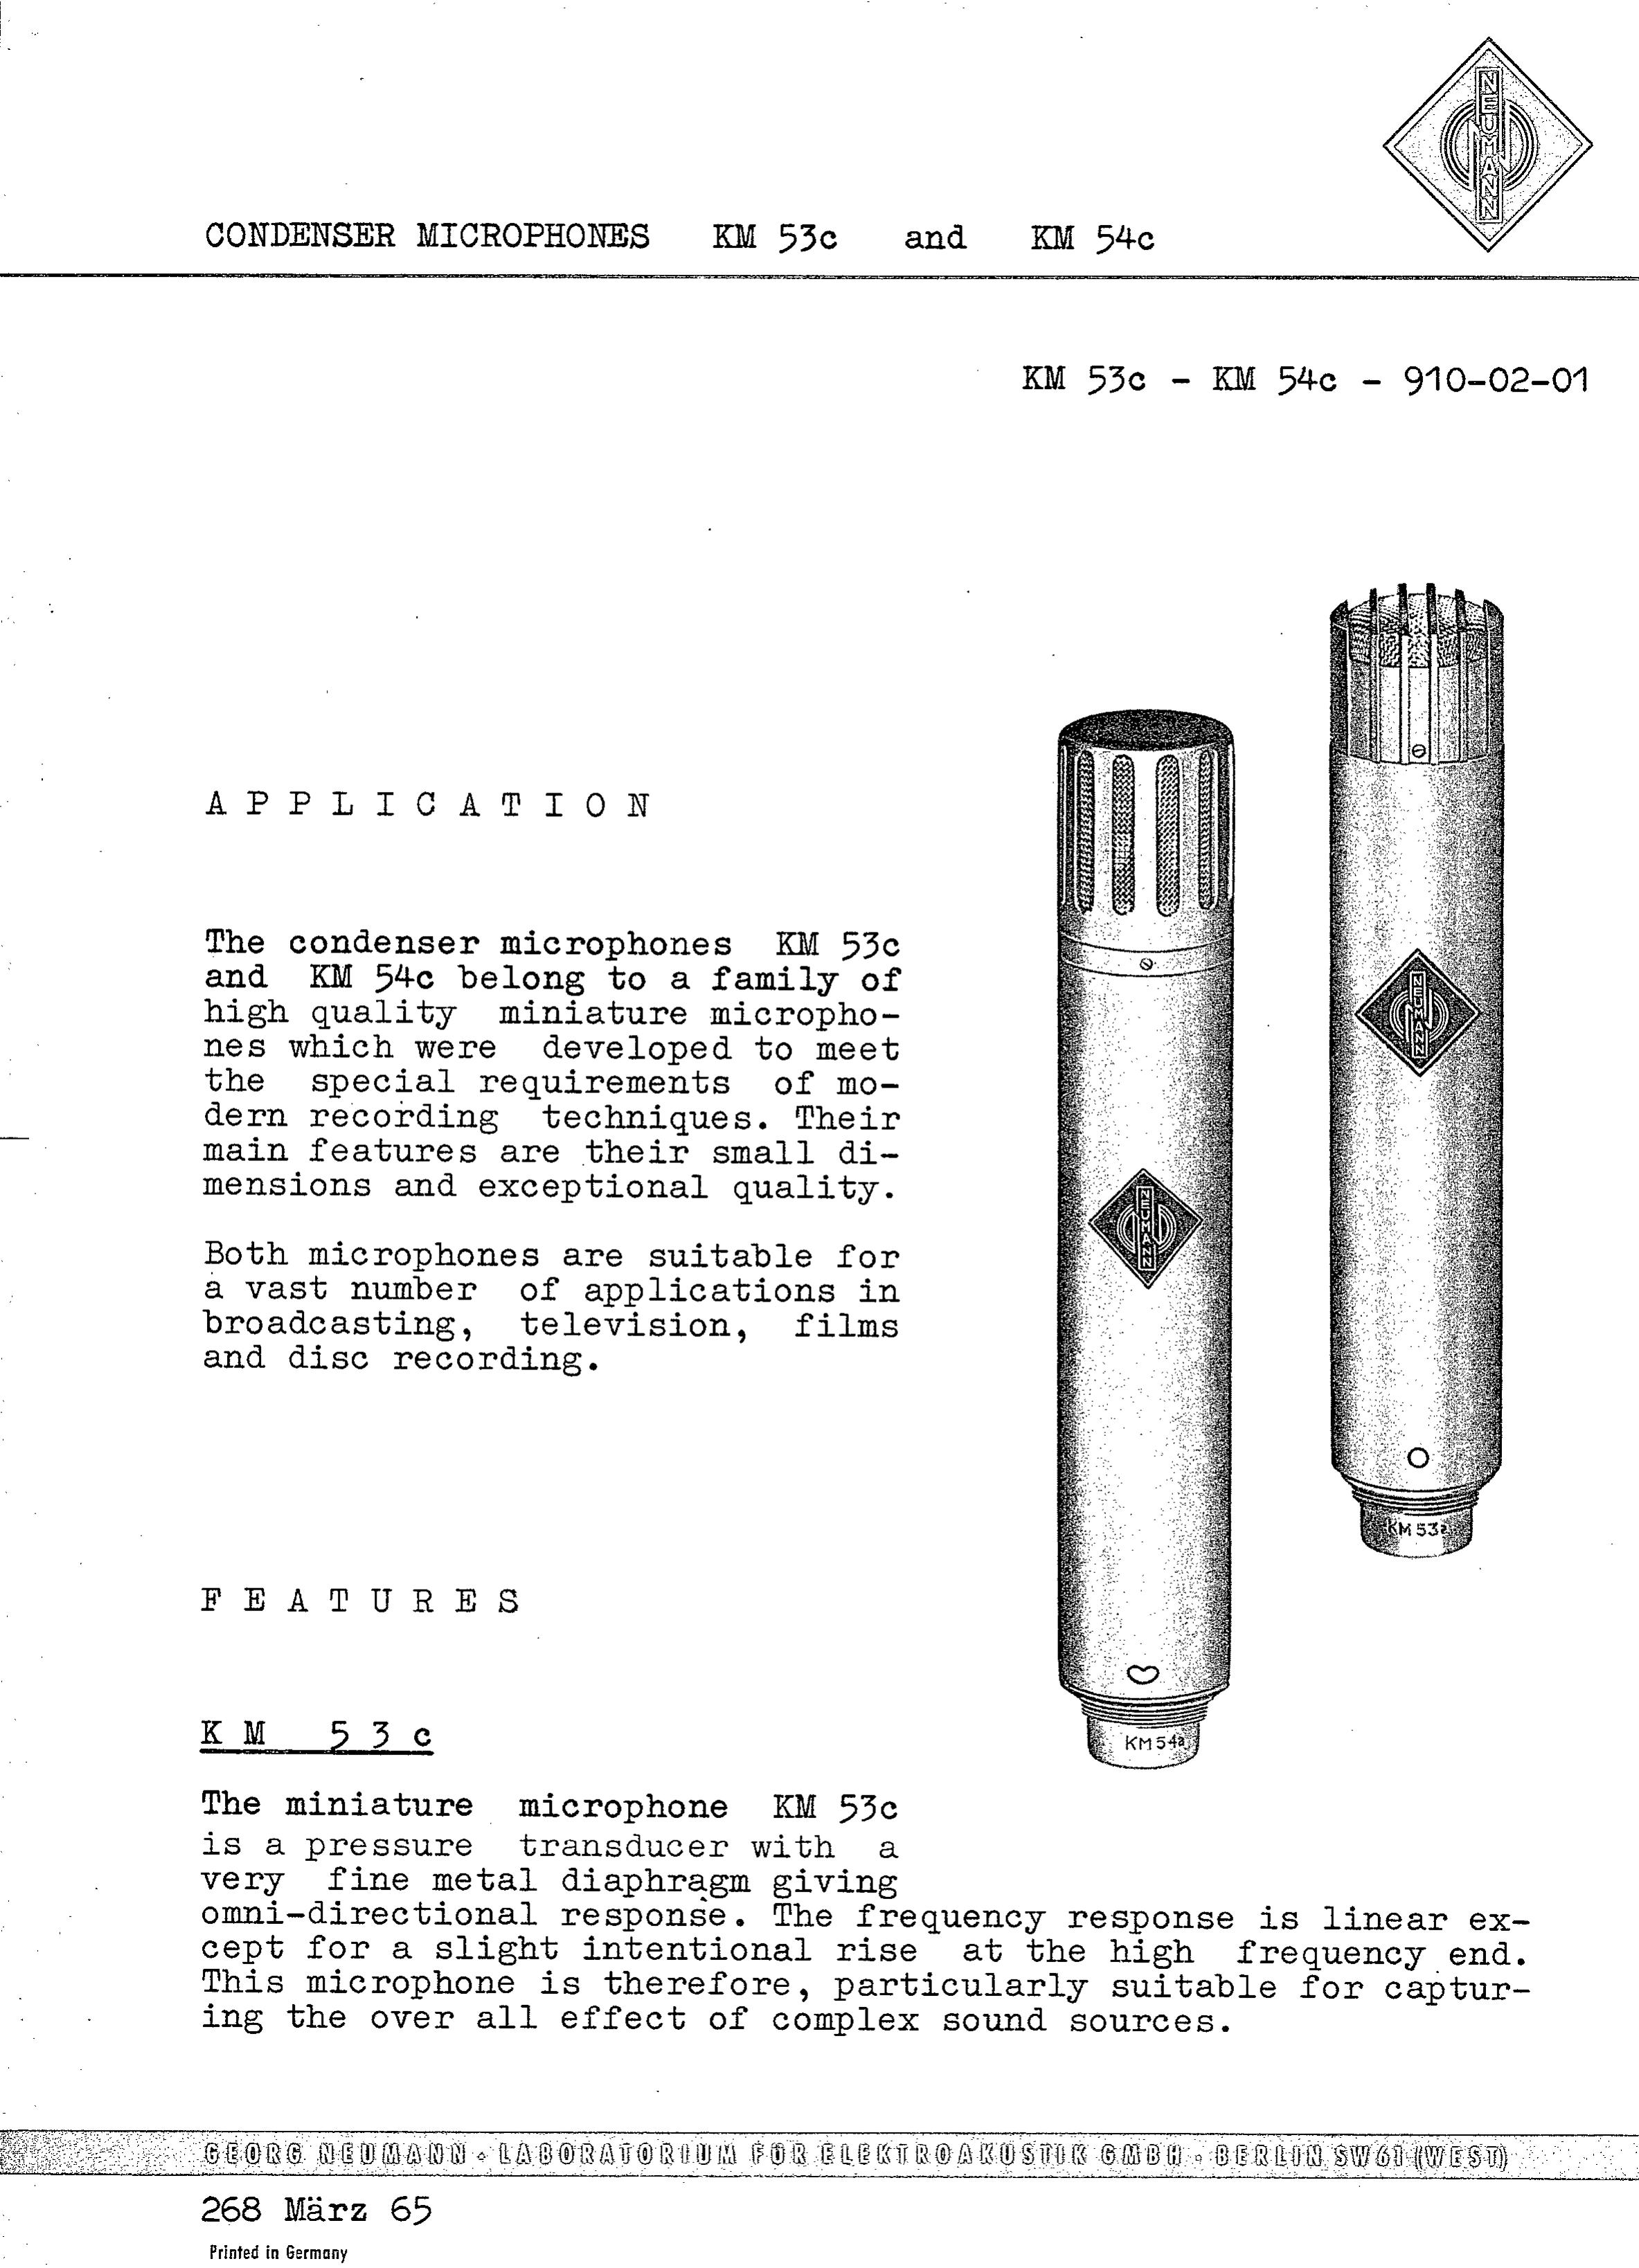 Neumann.Berlin KM 54c Microphone User Manual